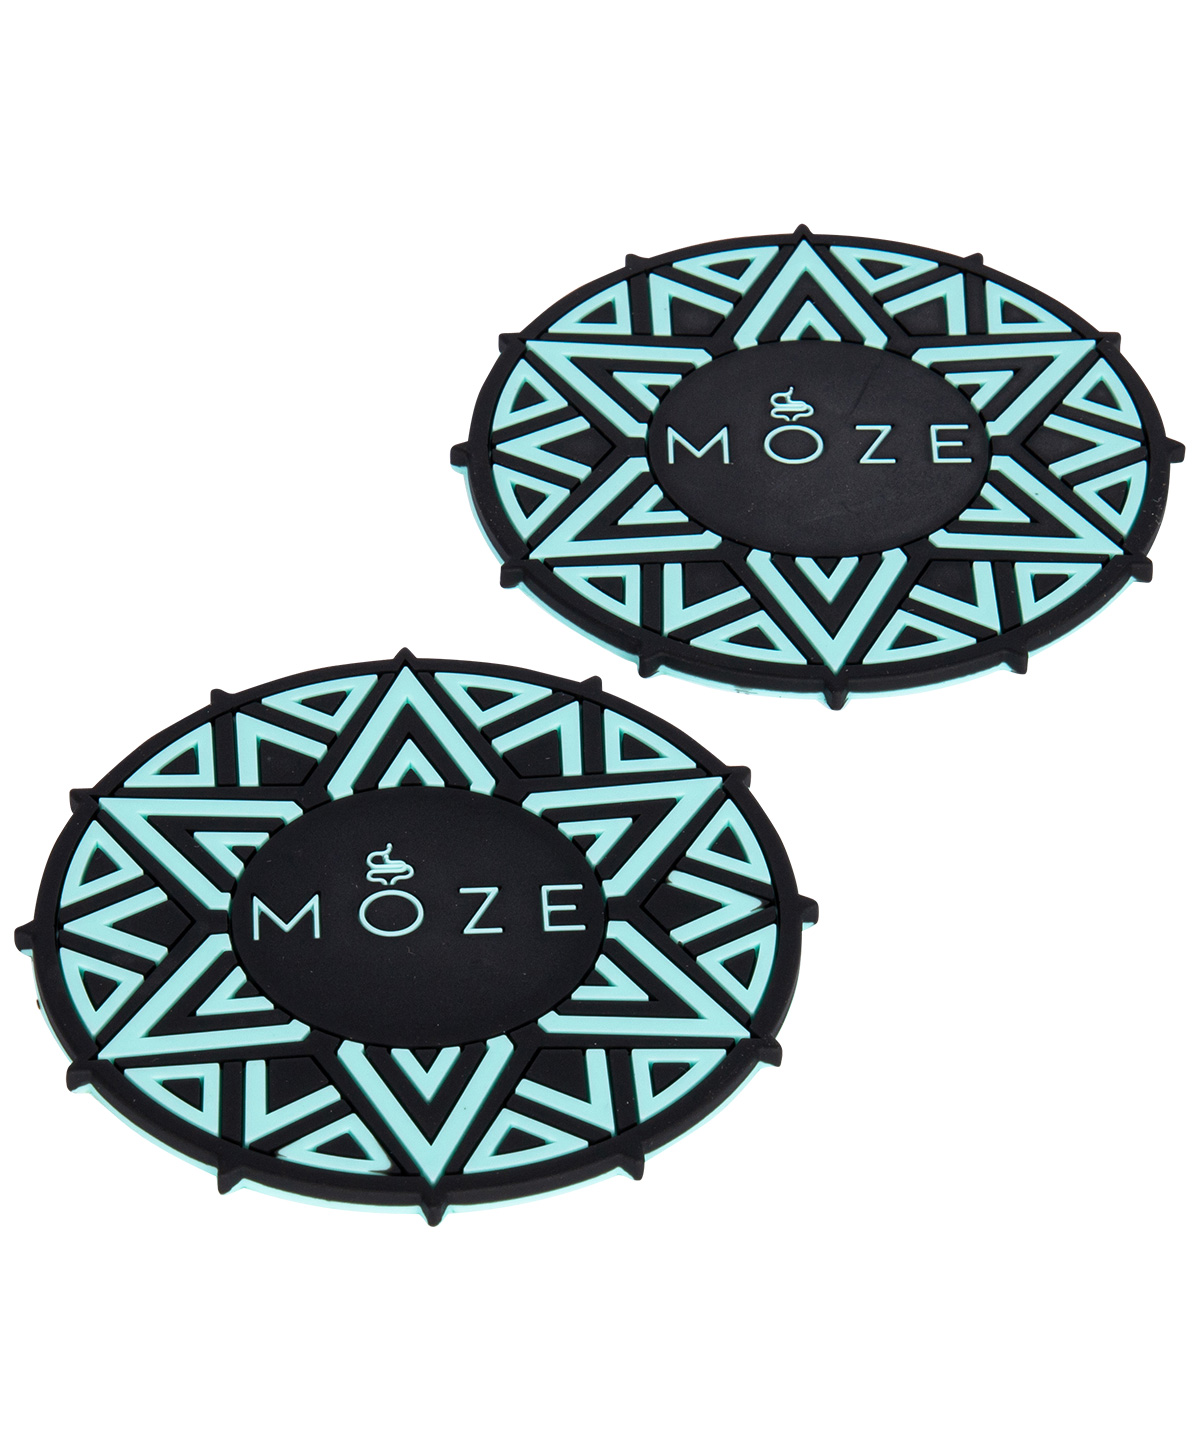 Moze Drinking glass coaster (2er Set) - Mint